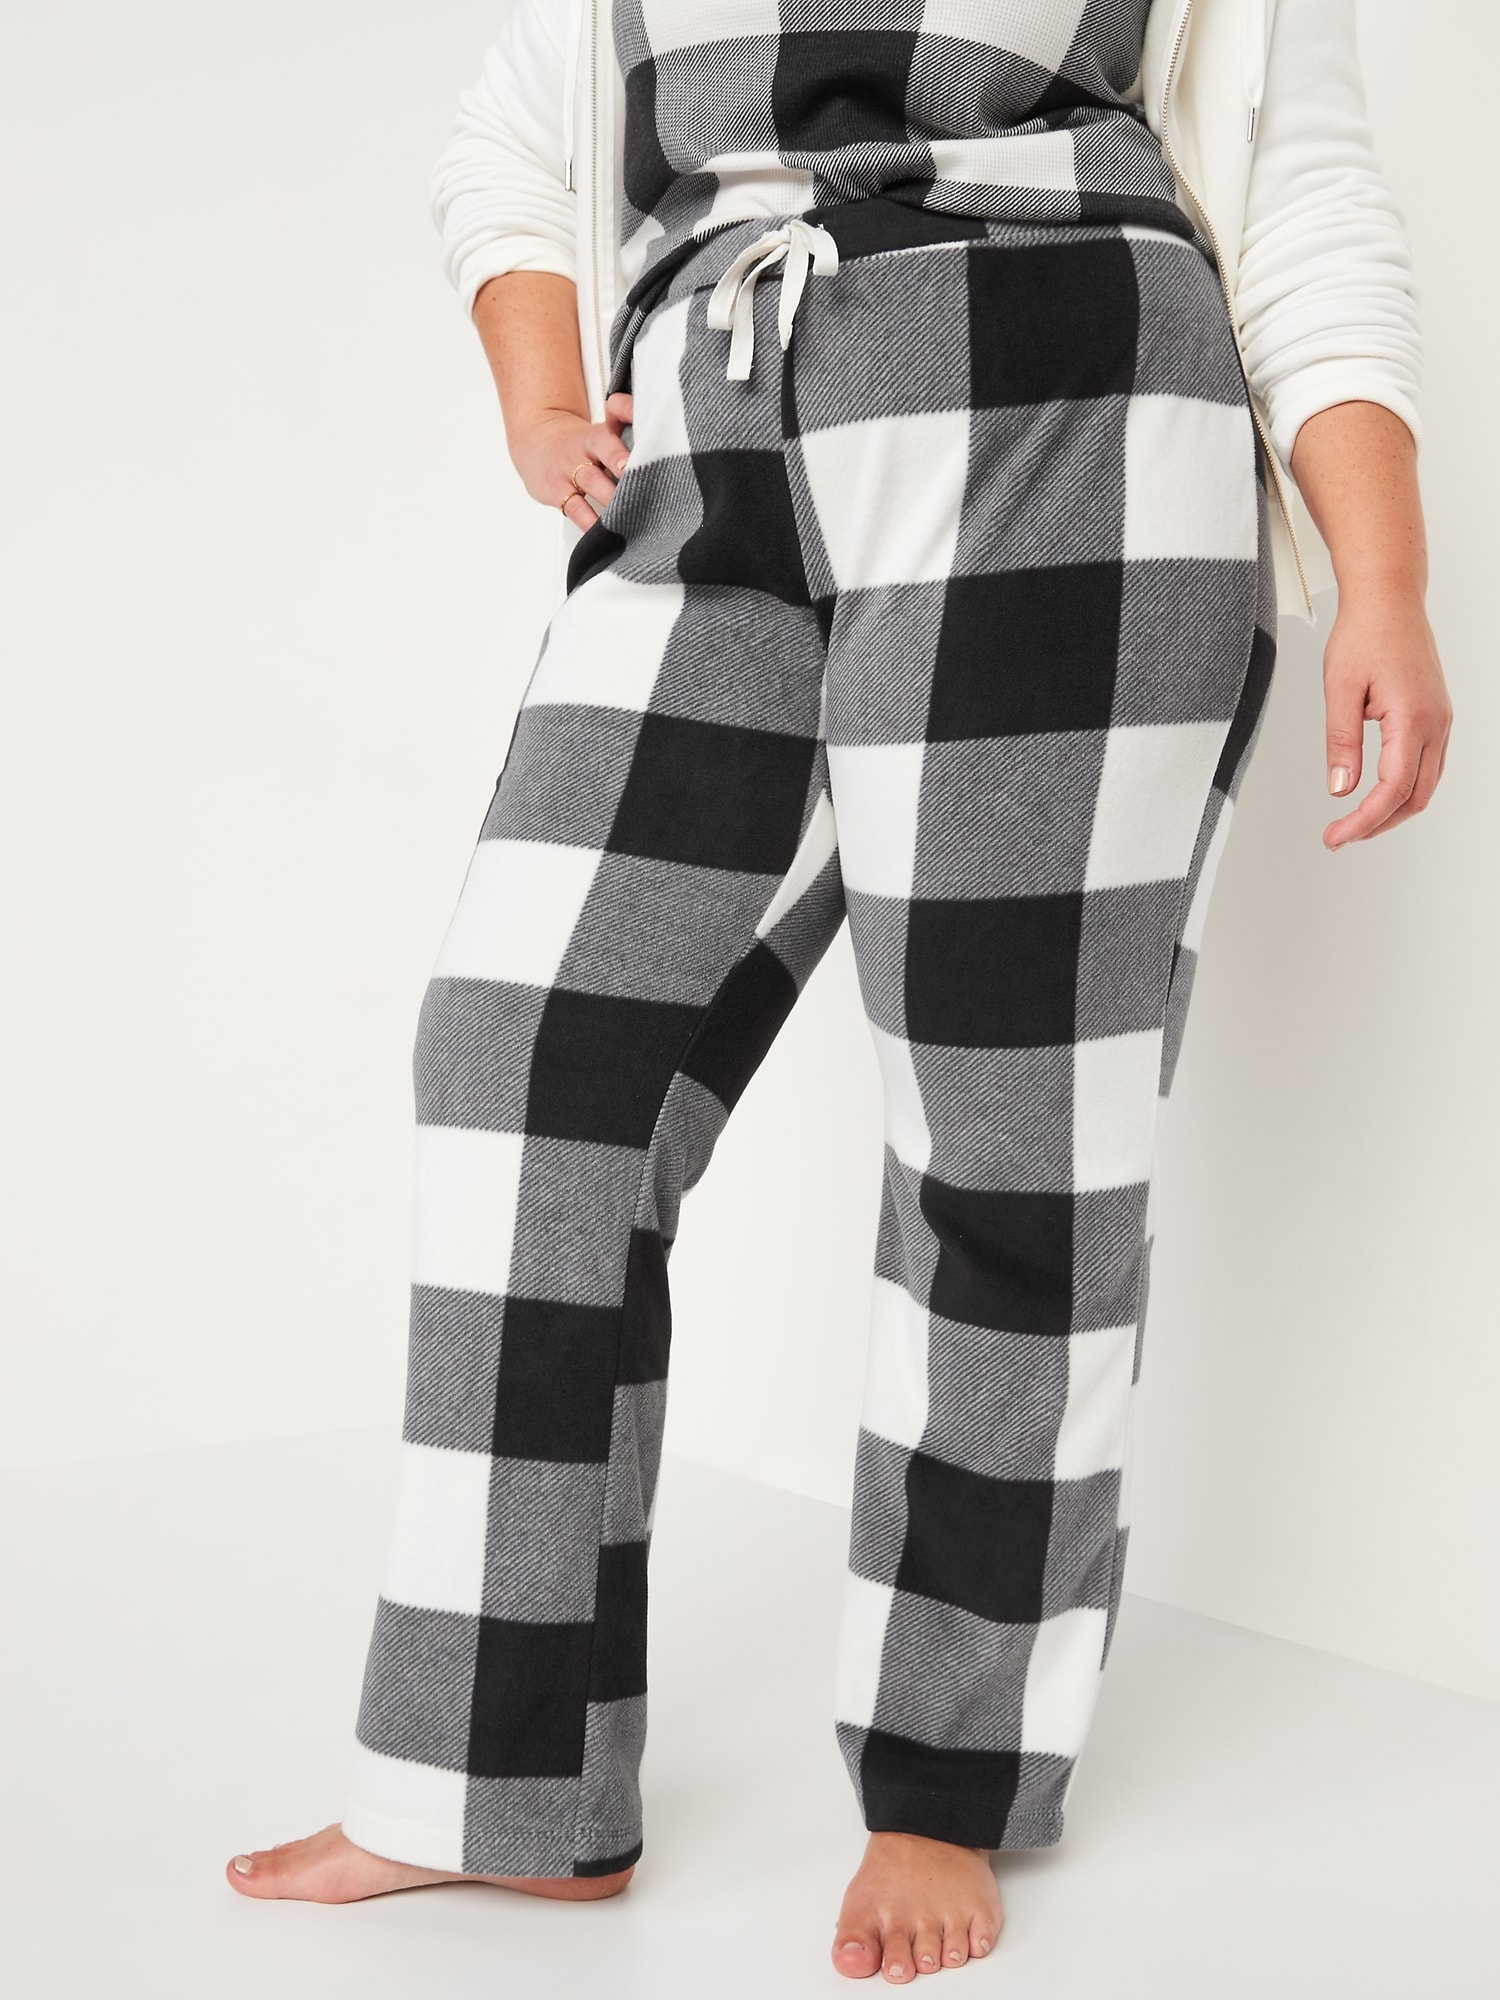 Matching Printed Microfleece Pajama Pants for Women